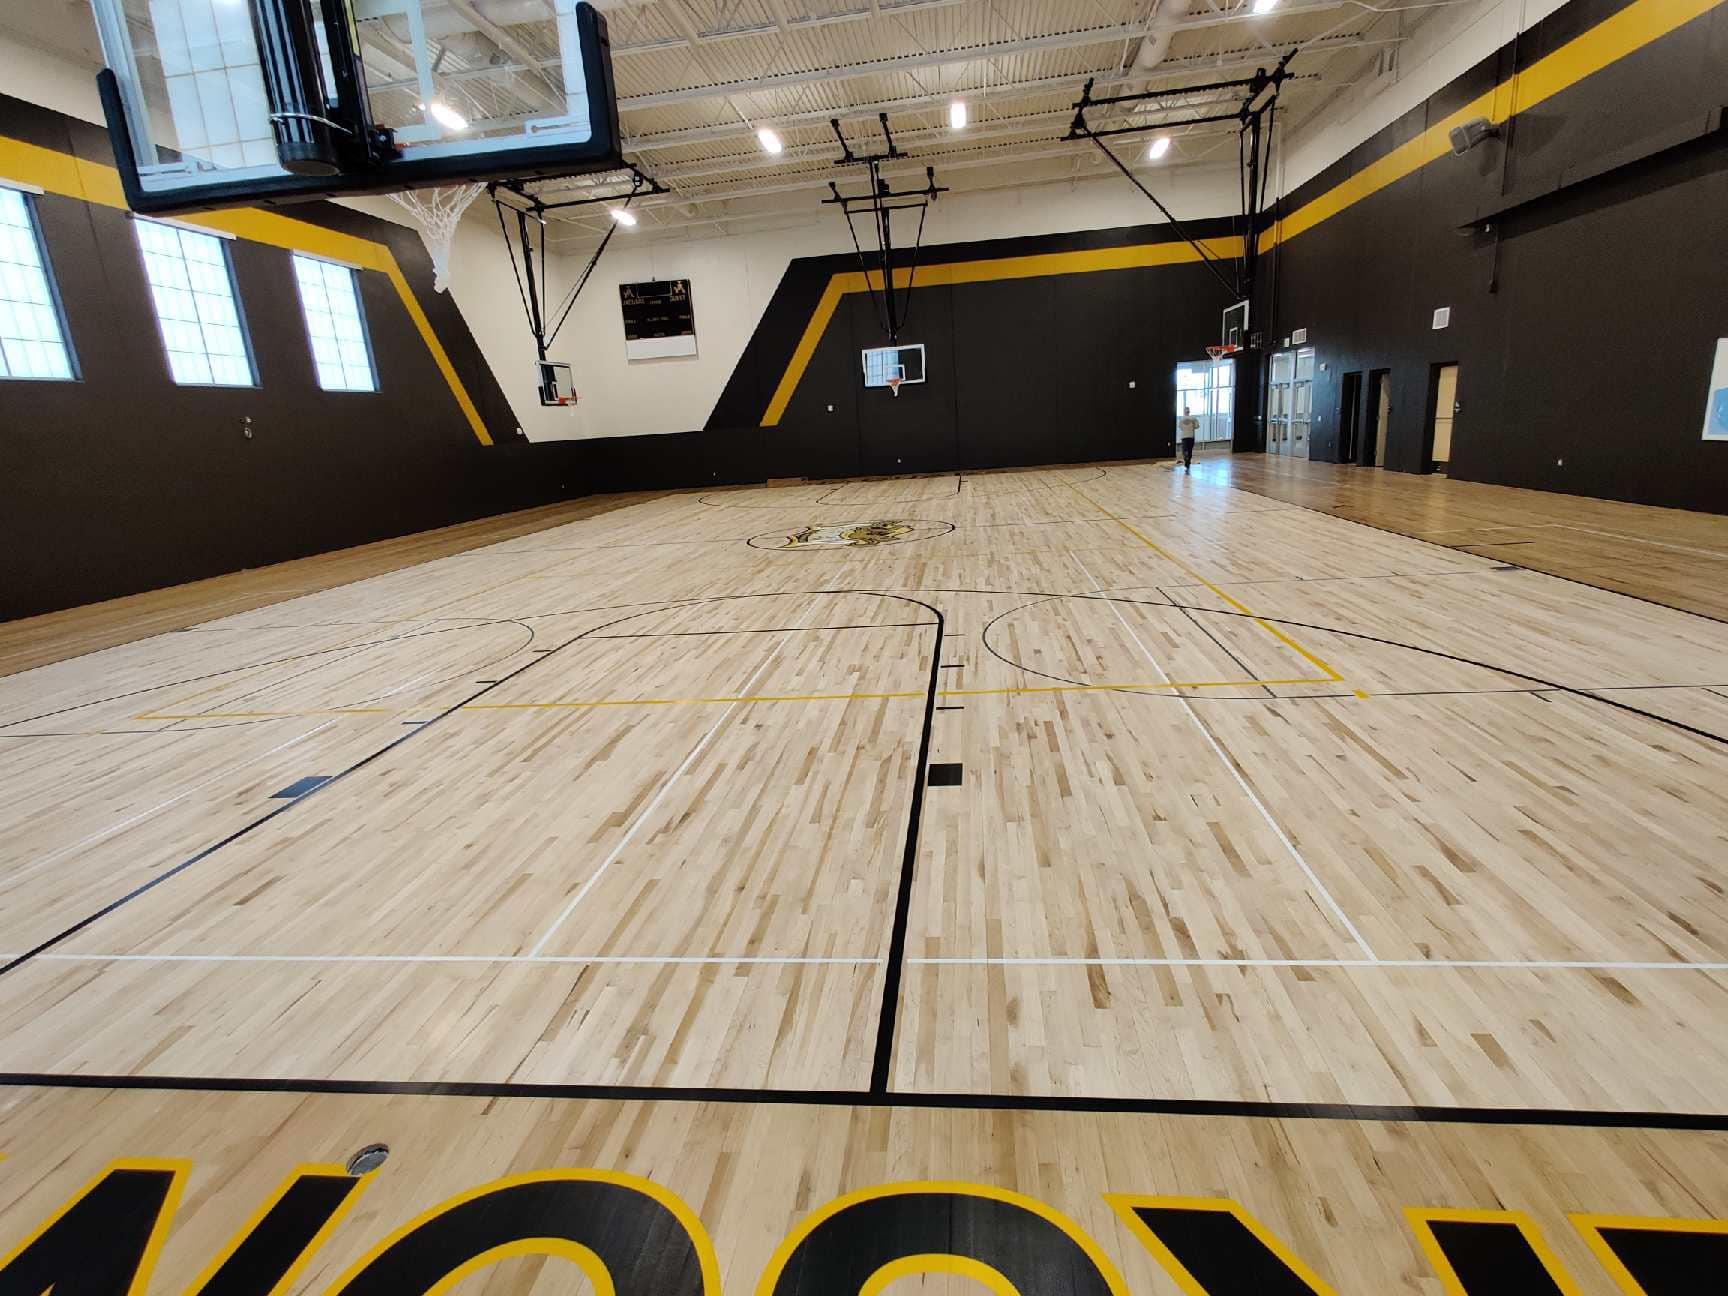 Commercial Epoxy Sports Floor Coating K 12 Installations